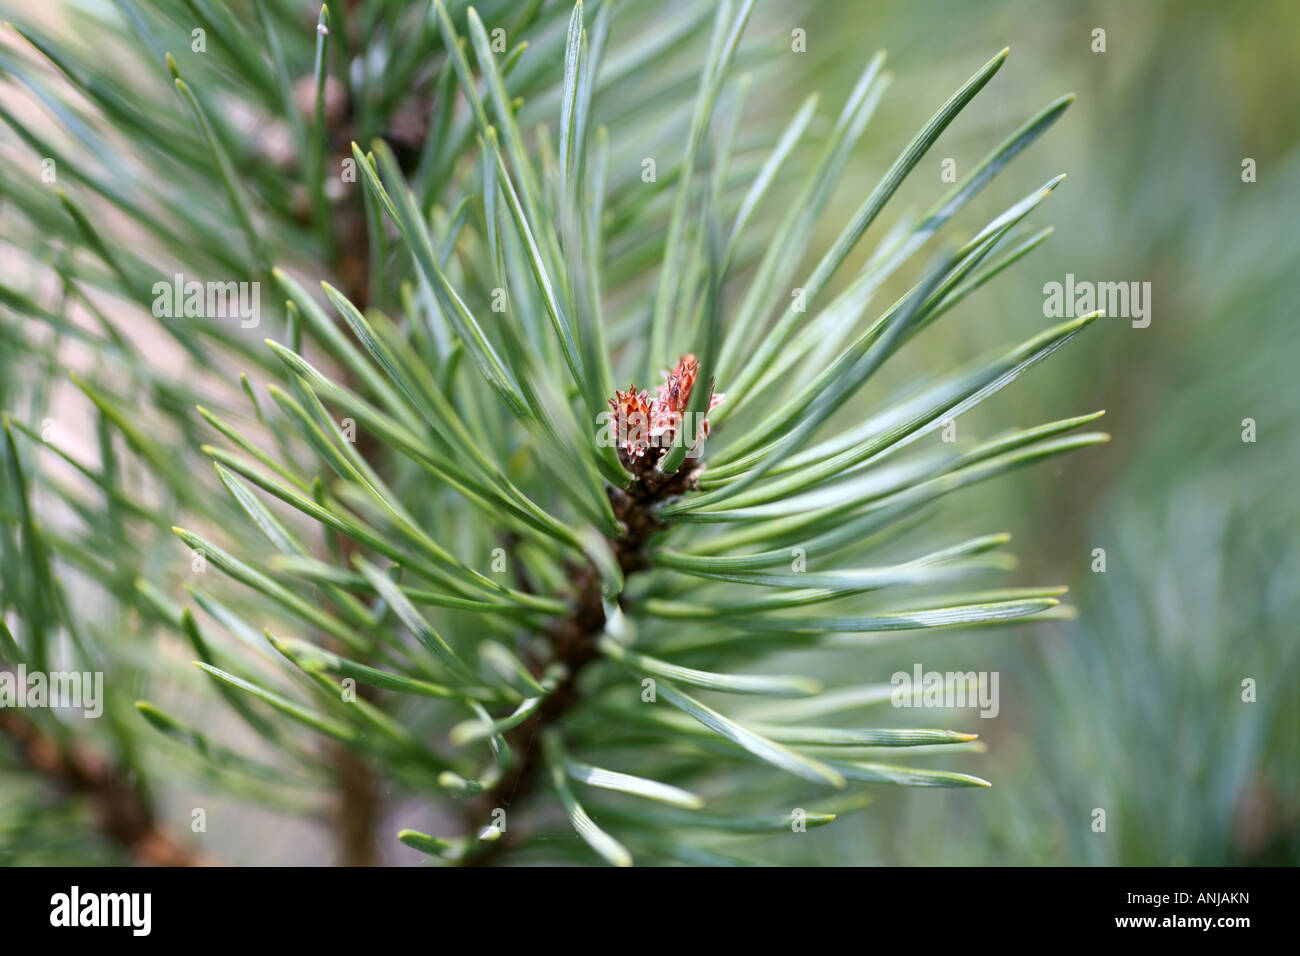 pine needles close up Stock Photo